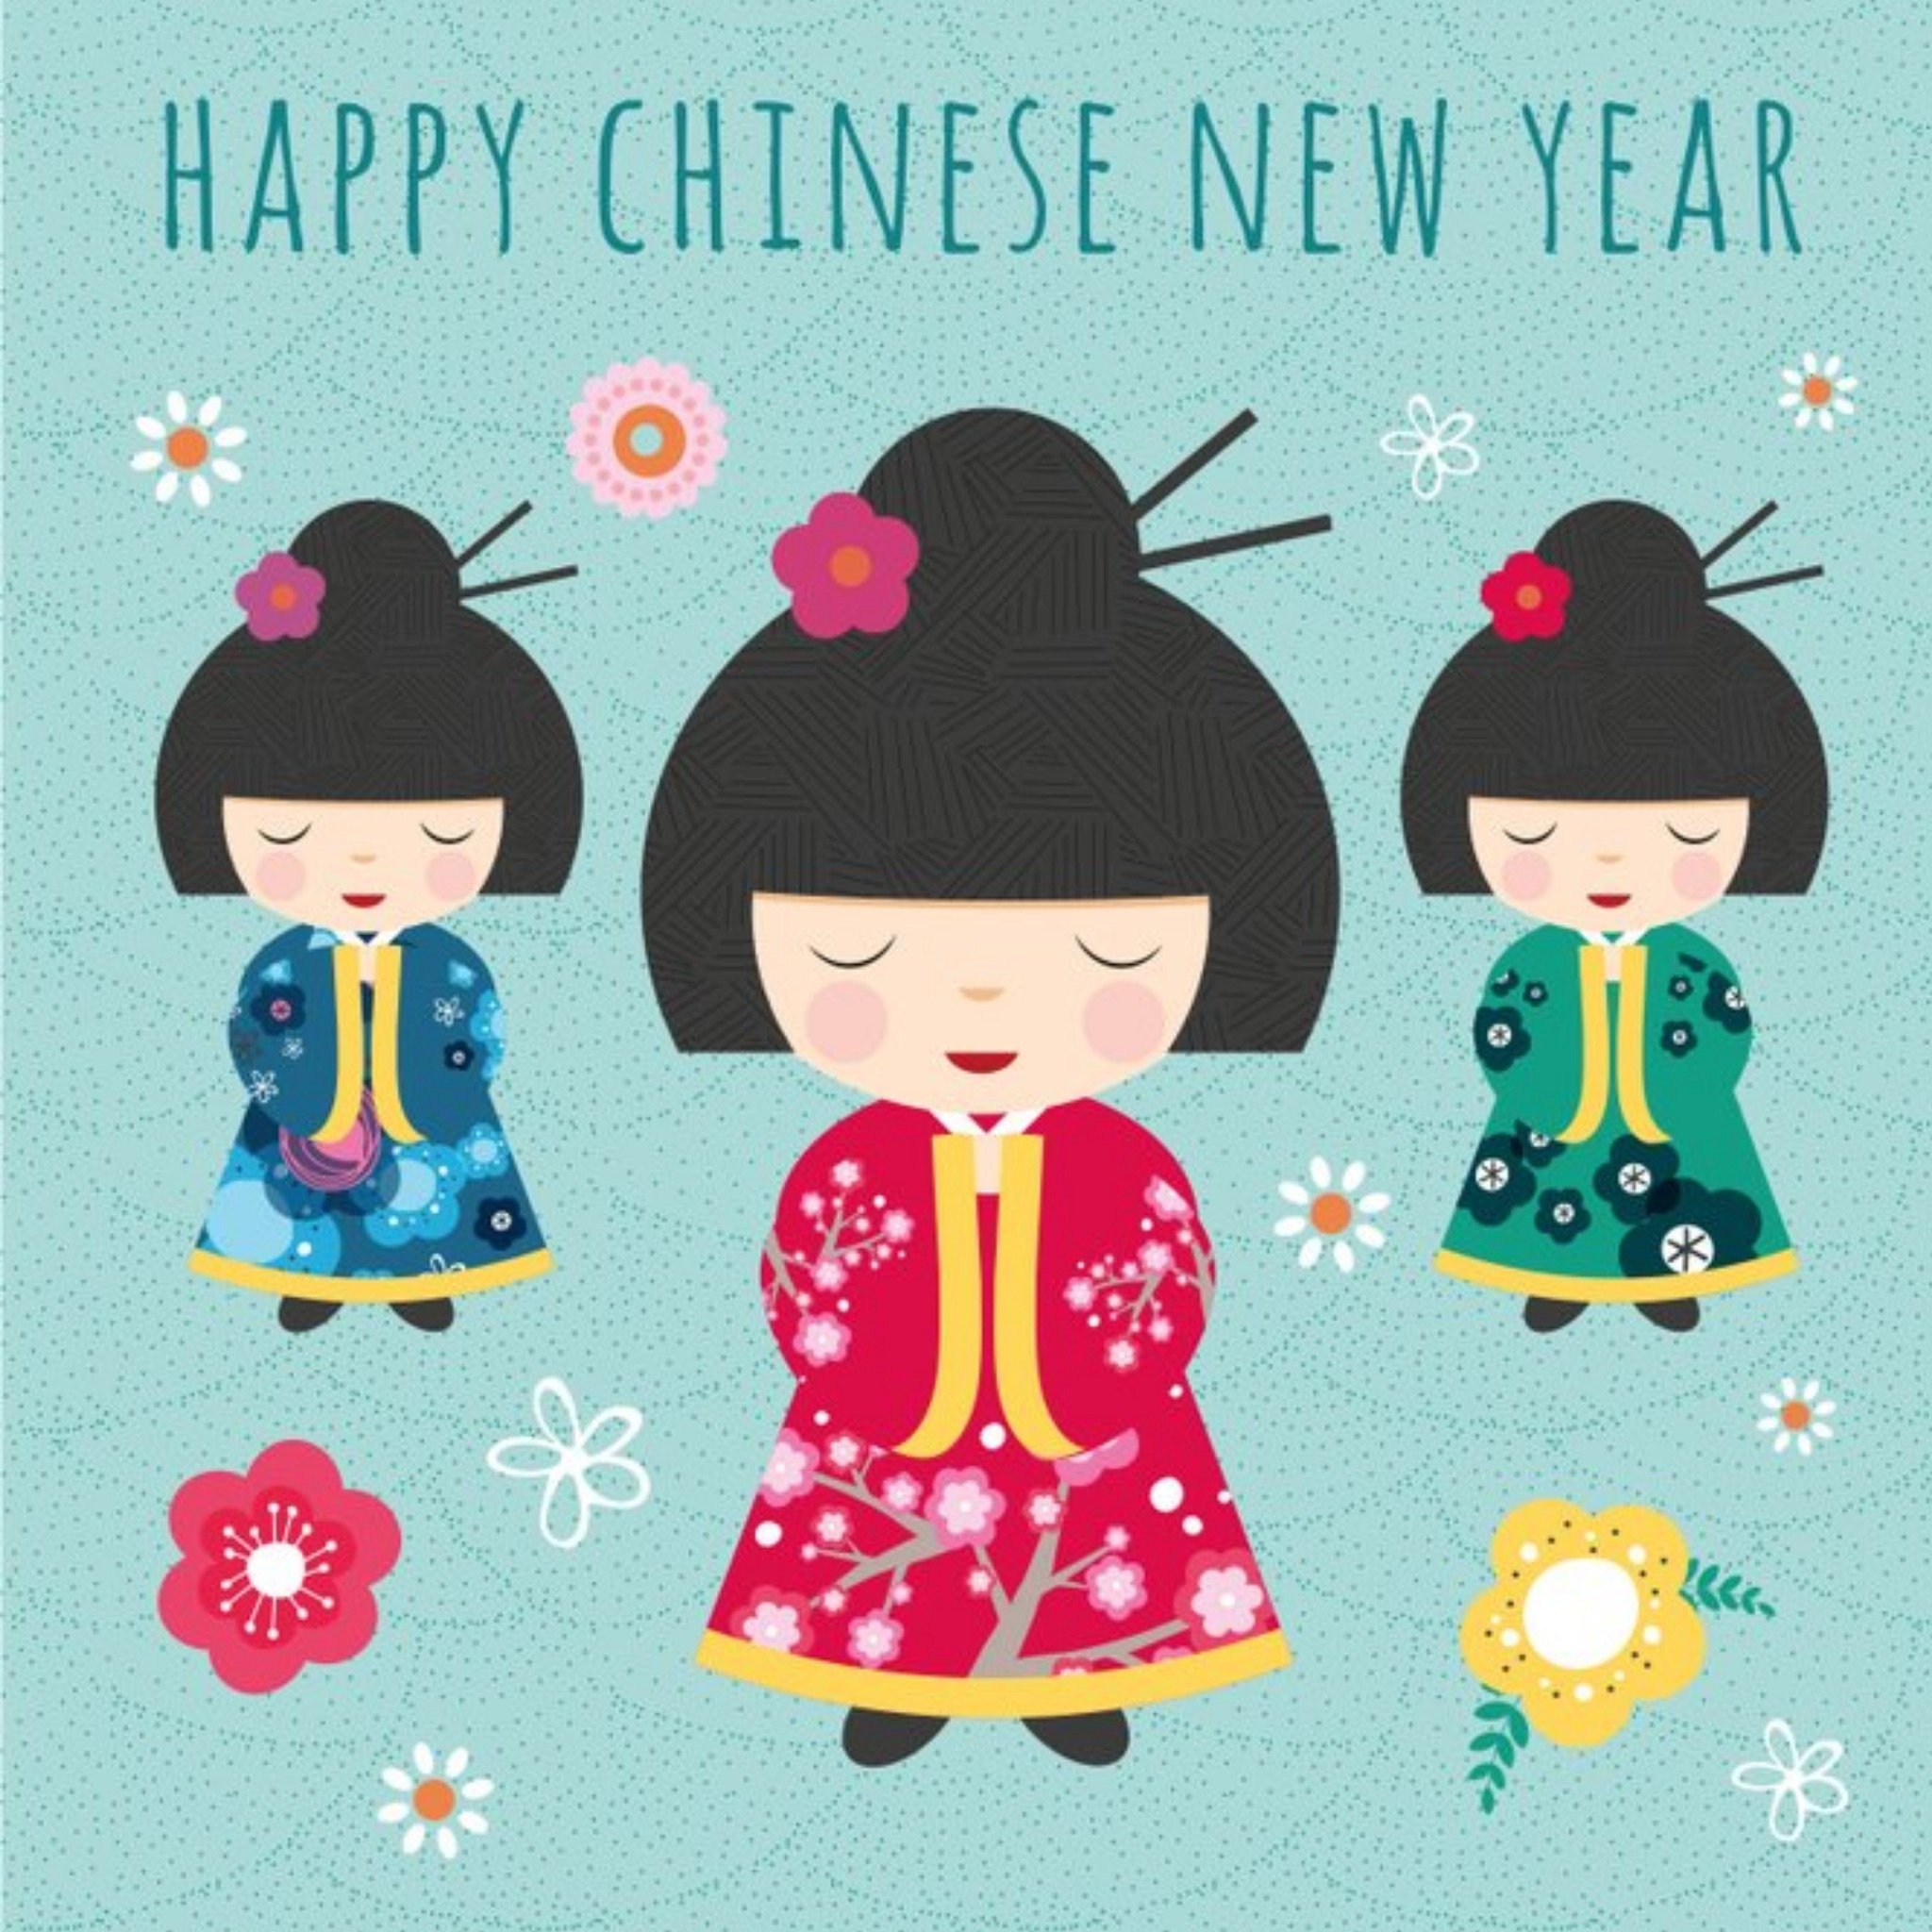 Moonpig Geishas 2021 Happy Chinese New Year Card, Square